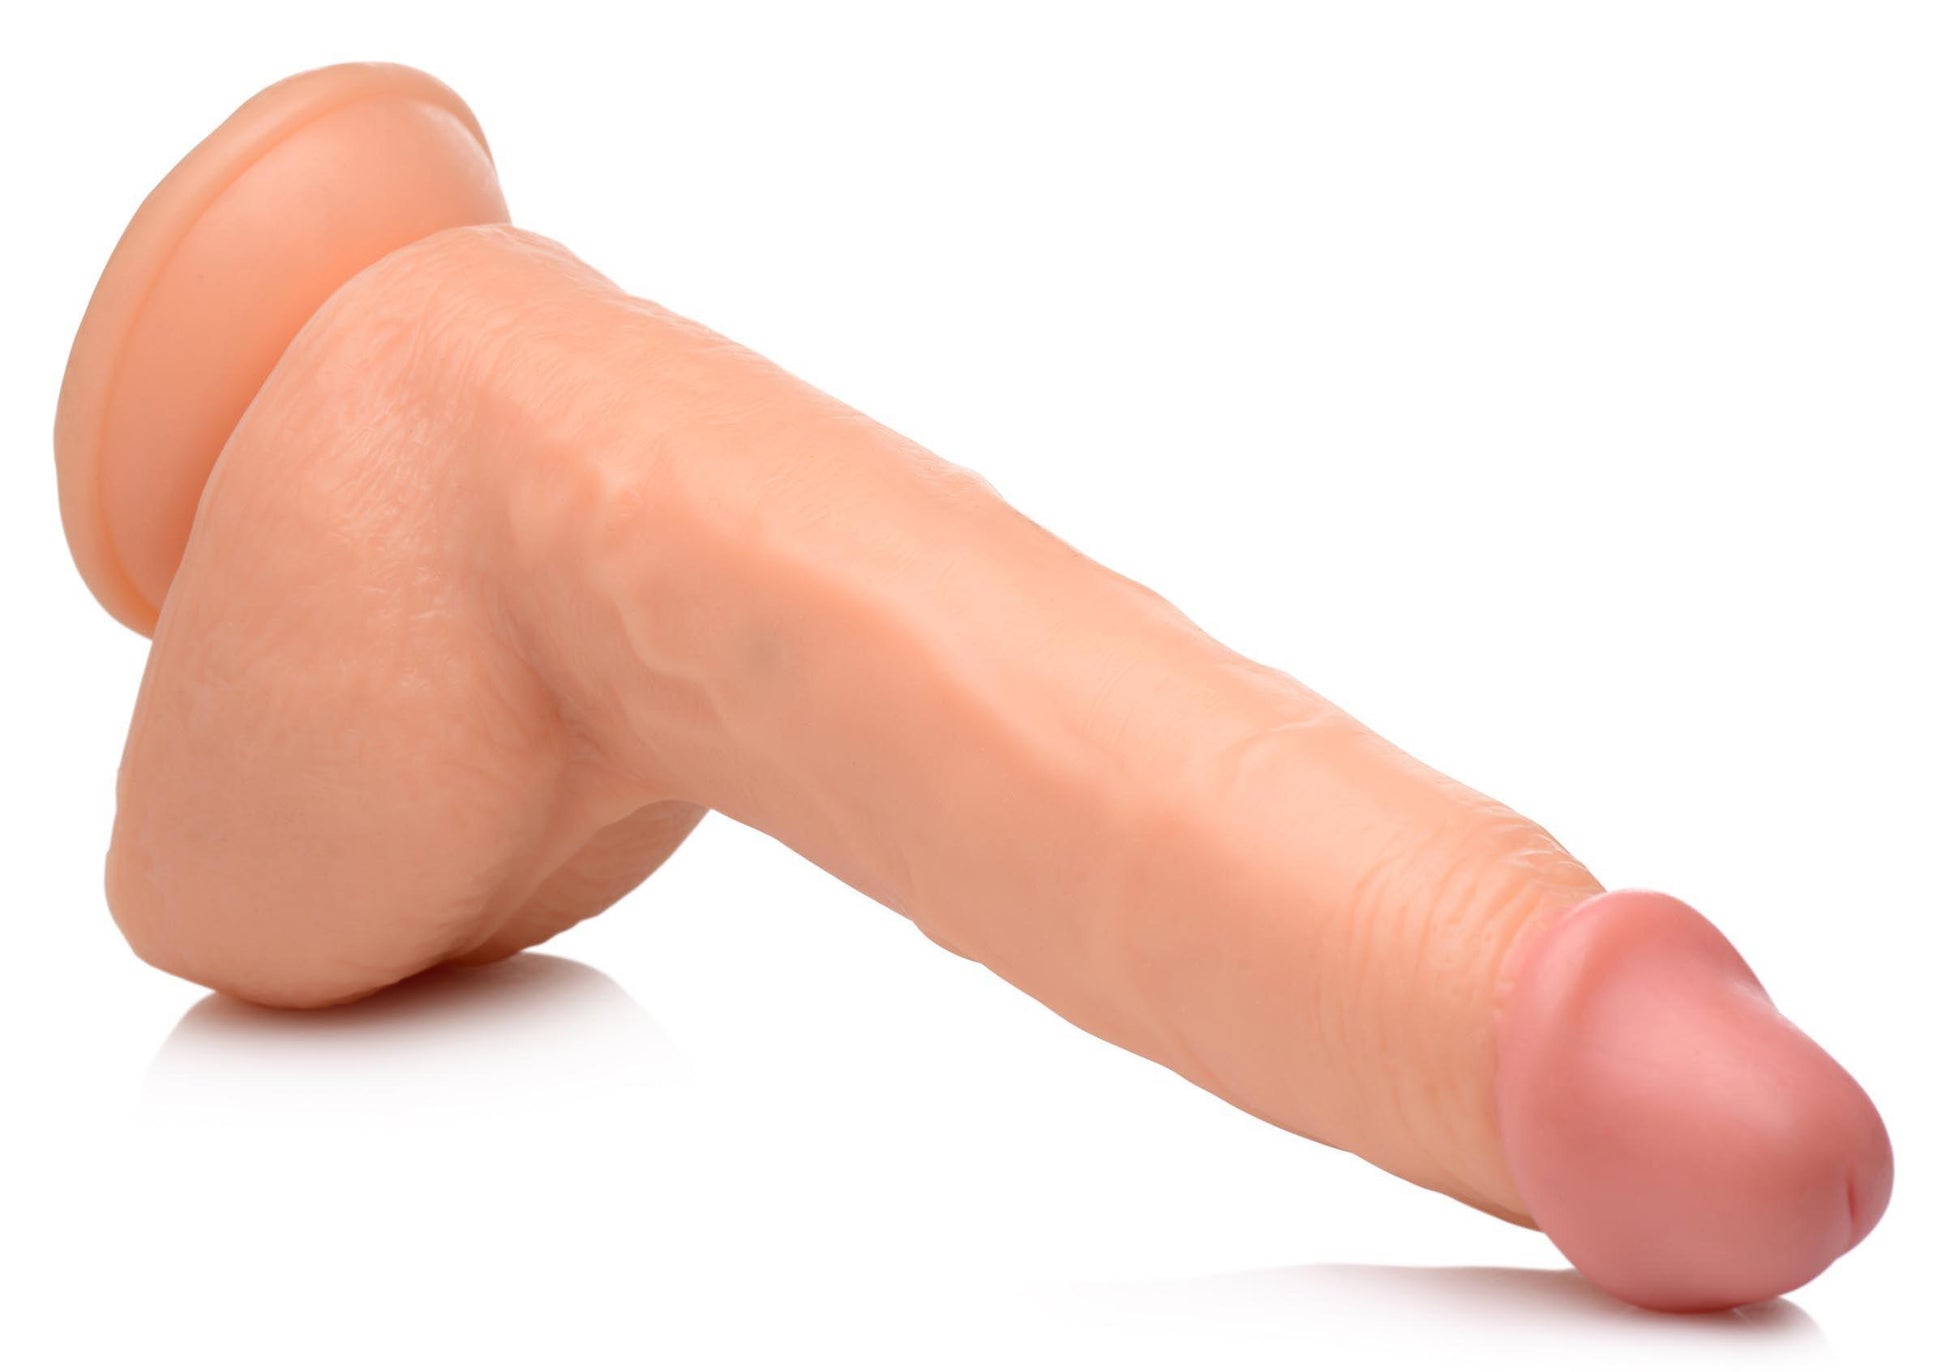 Beefy Brad 9 Inch Dildo With Balls - Light - My Sex Toy Hub